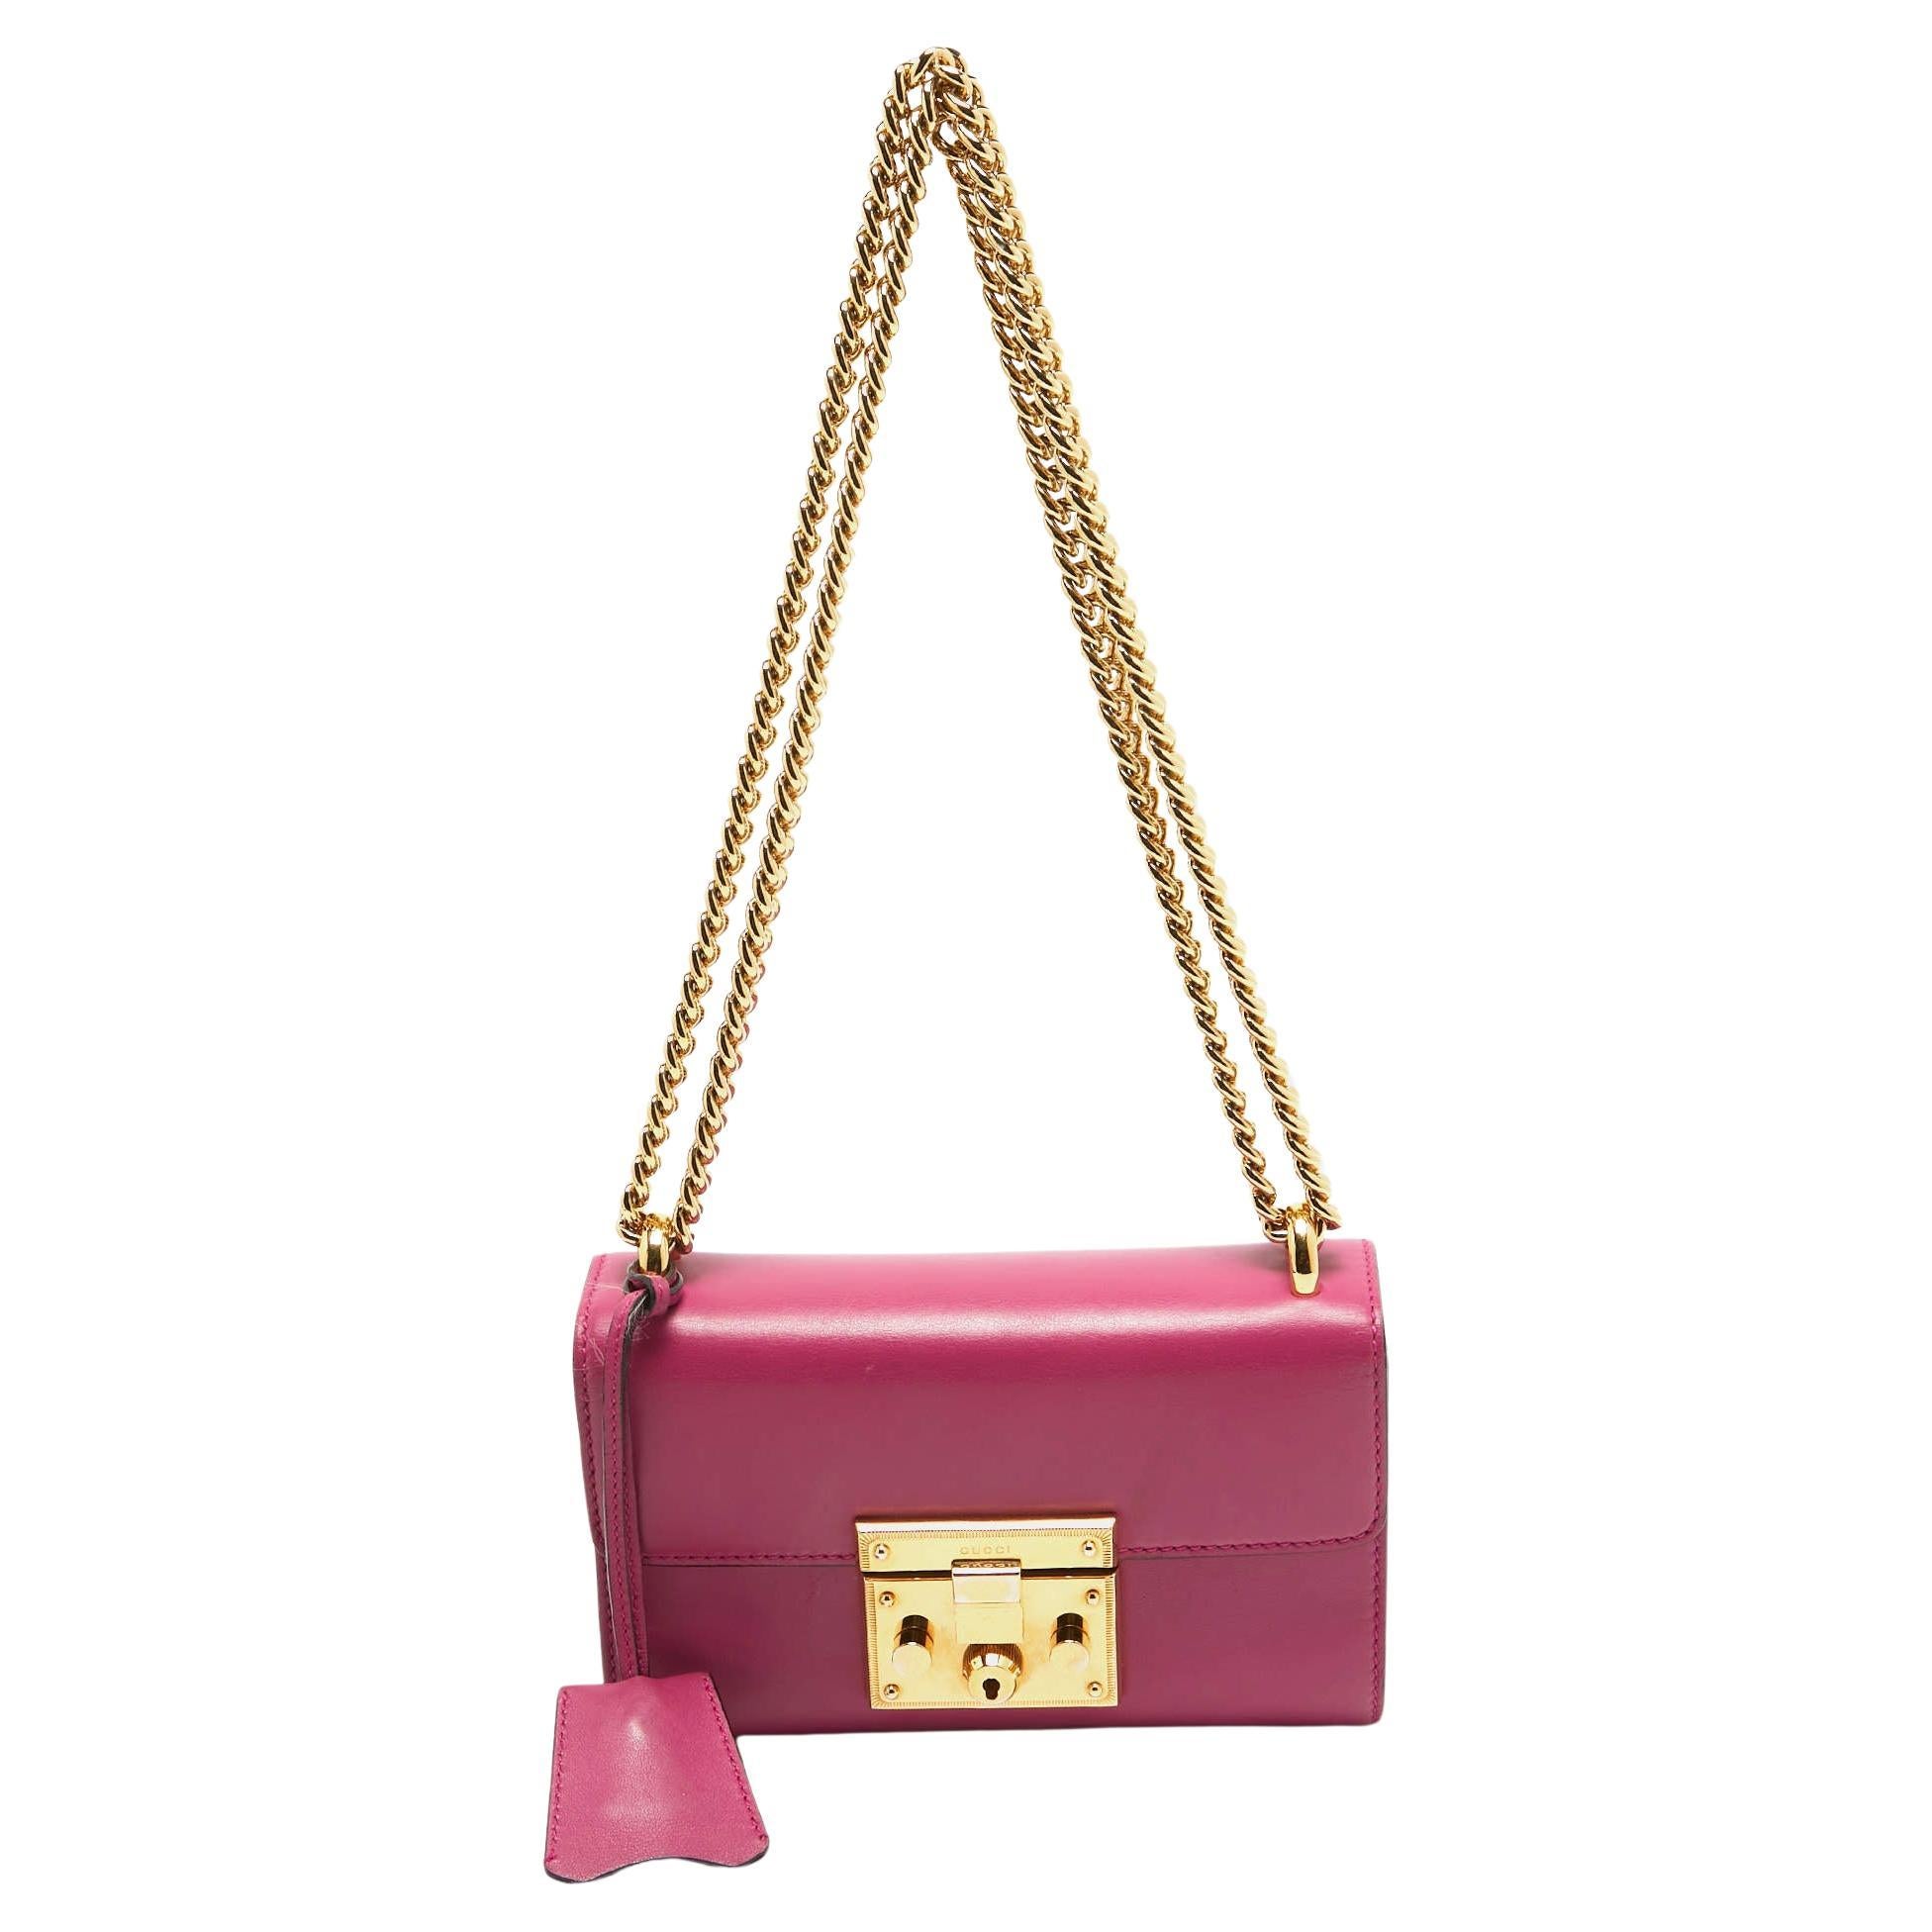 Gucci Pink Leather Small Padlock Shoulder Bag For Sale